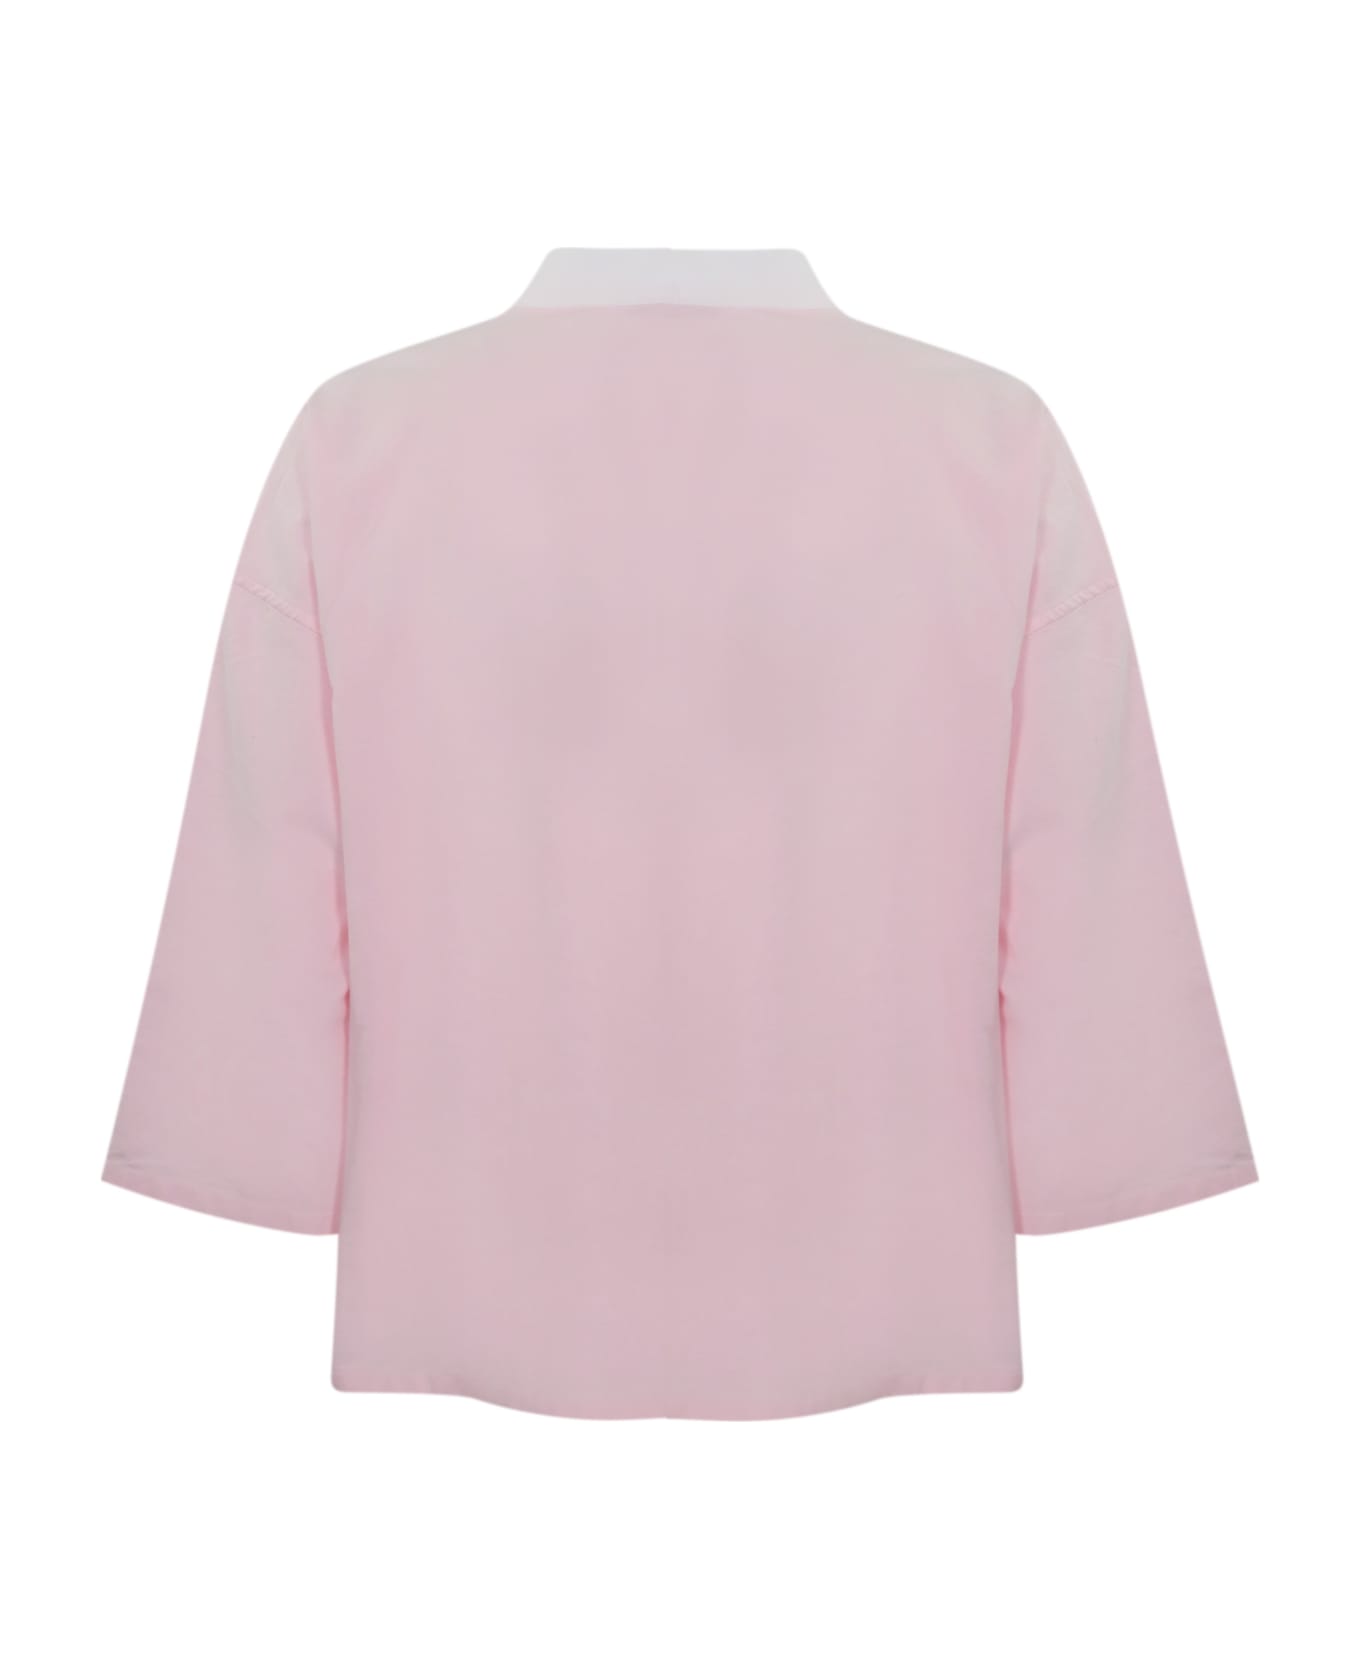 Roy Rogers Mandarin Collar Shirt - Washed pink